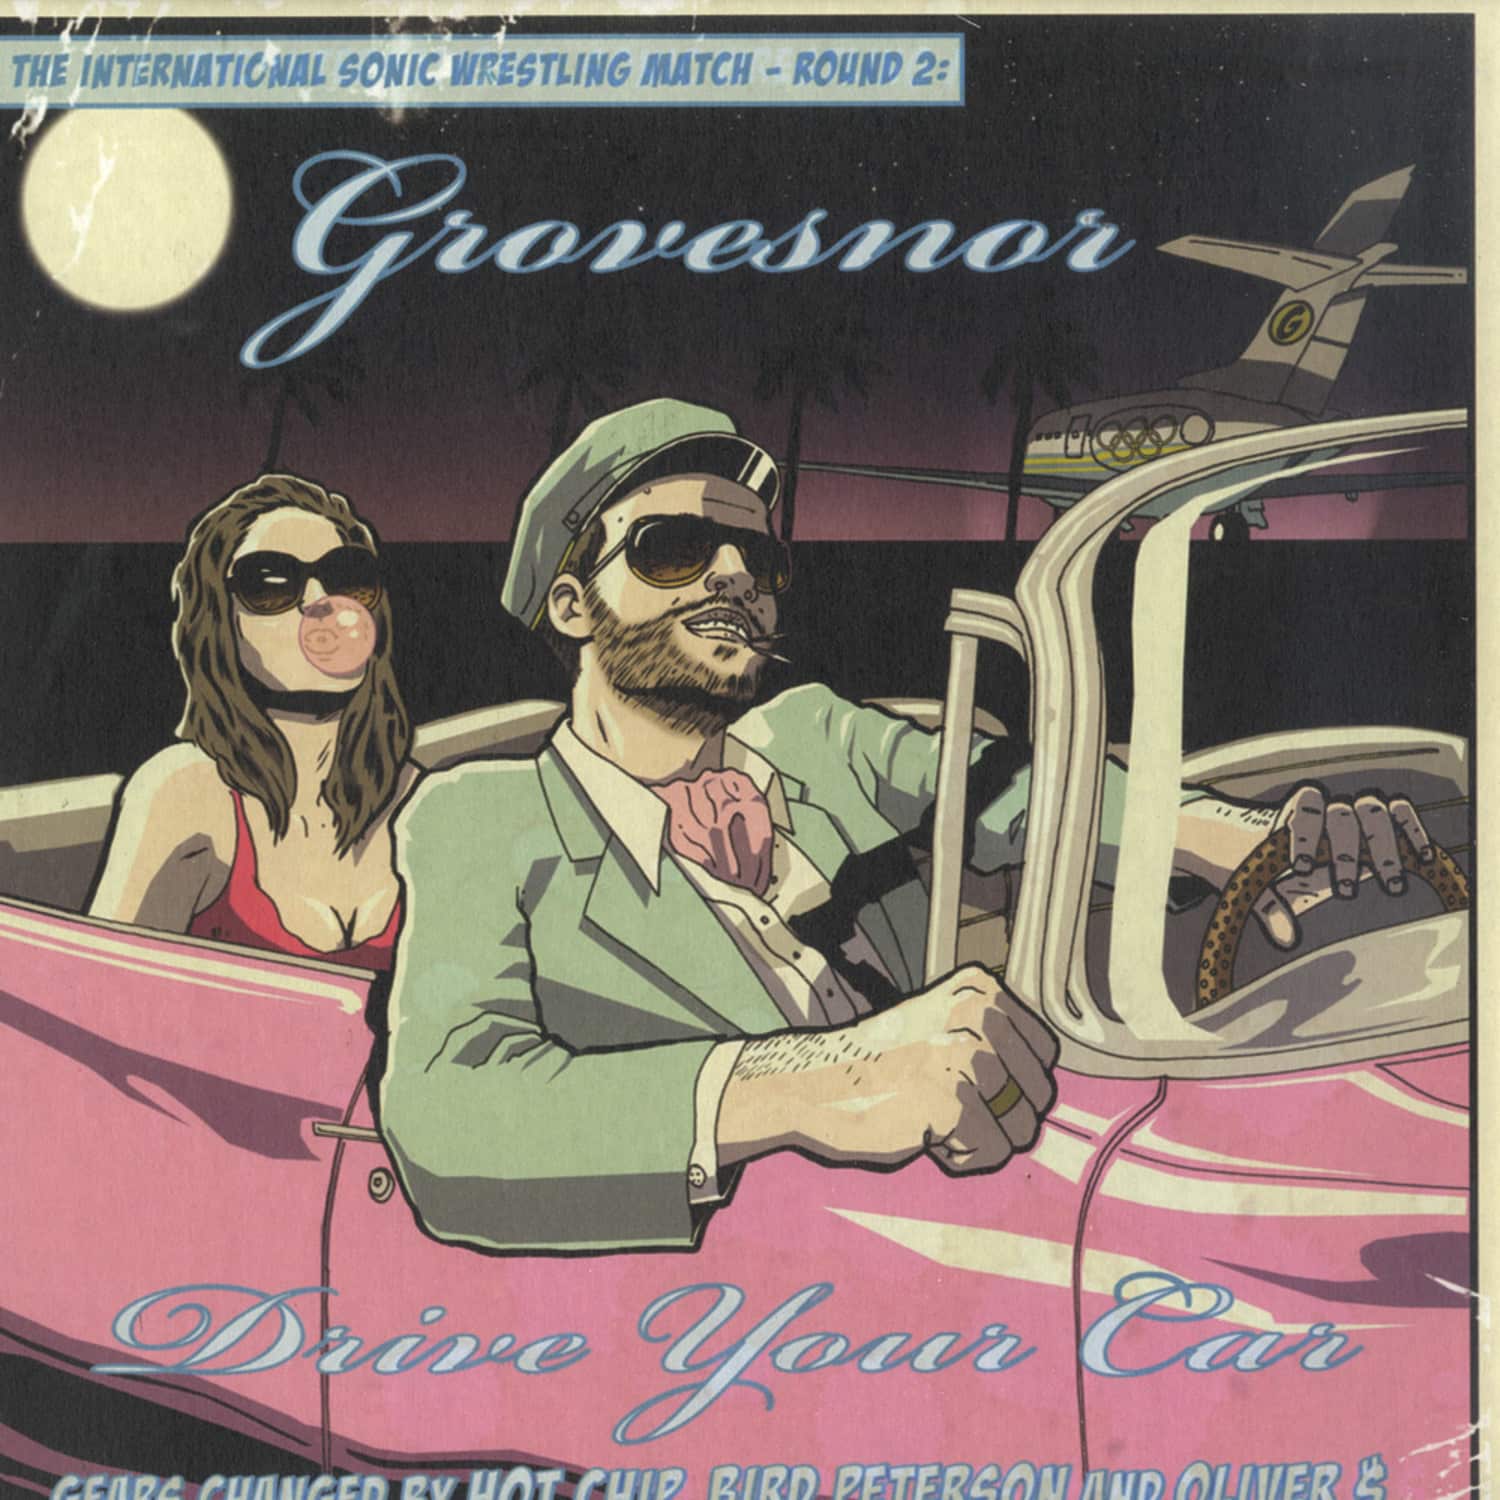 Grovesnor - DRIVE MY CAR